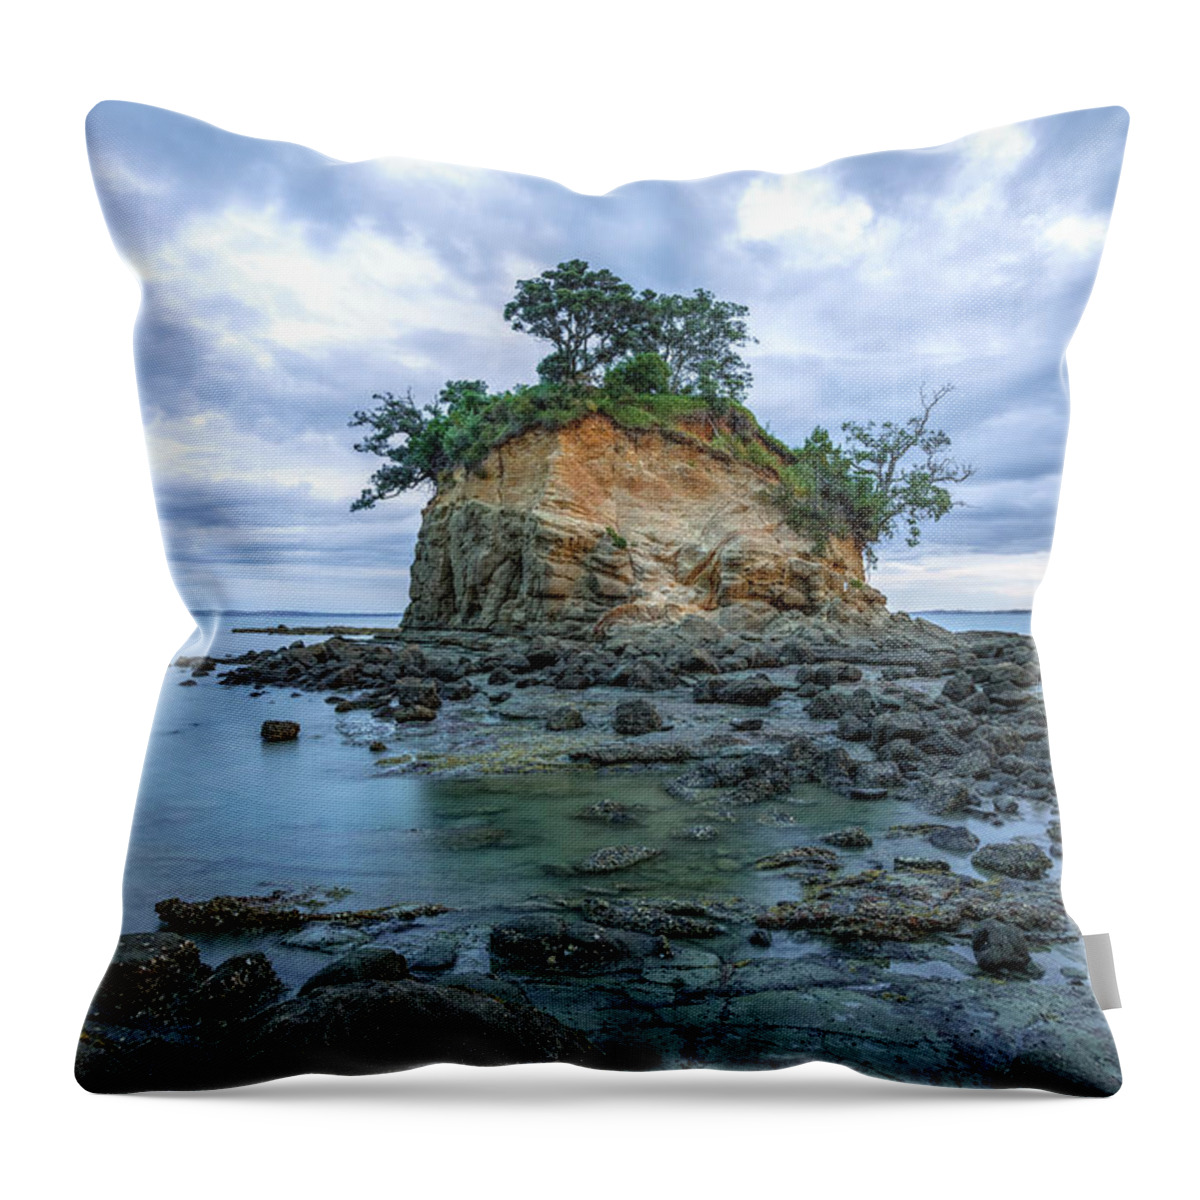 Waiake Bay Throw Pillow featuring the photograph Waiake - New Zealand by Joana Kruse